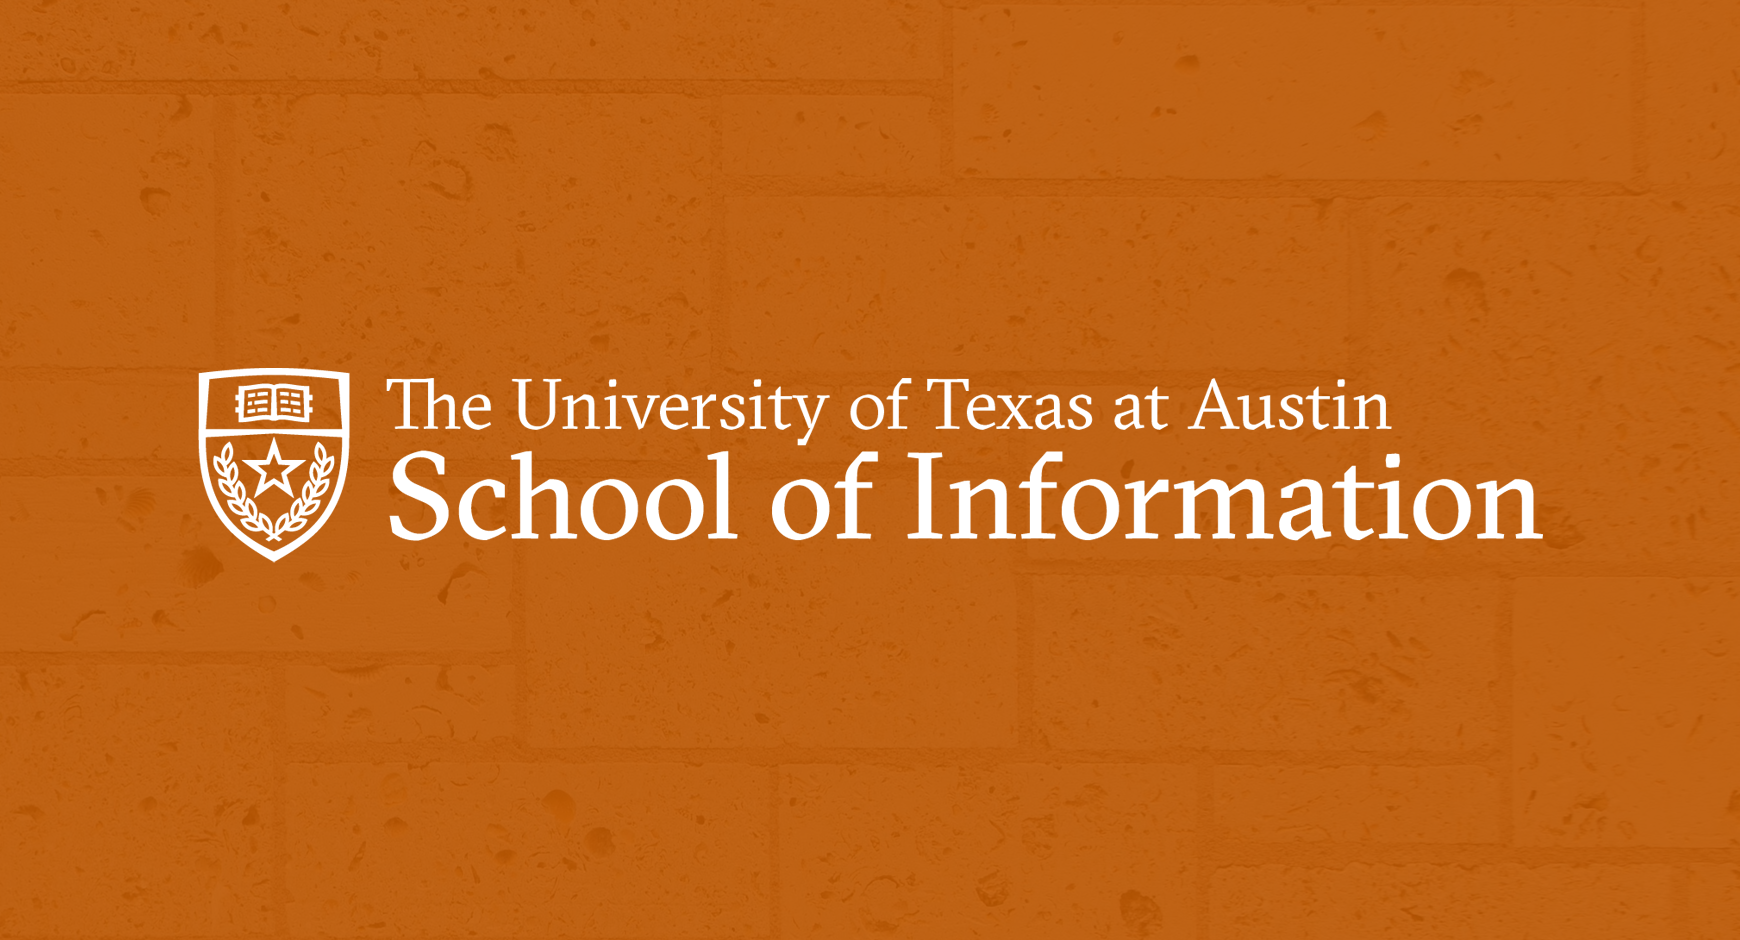 Orange news header image with iSchool logo